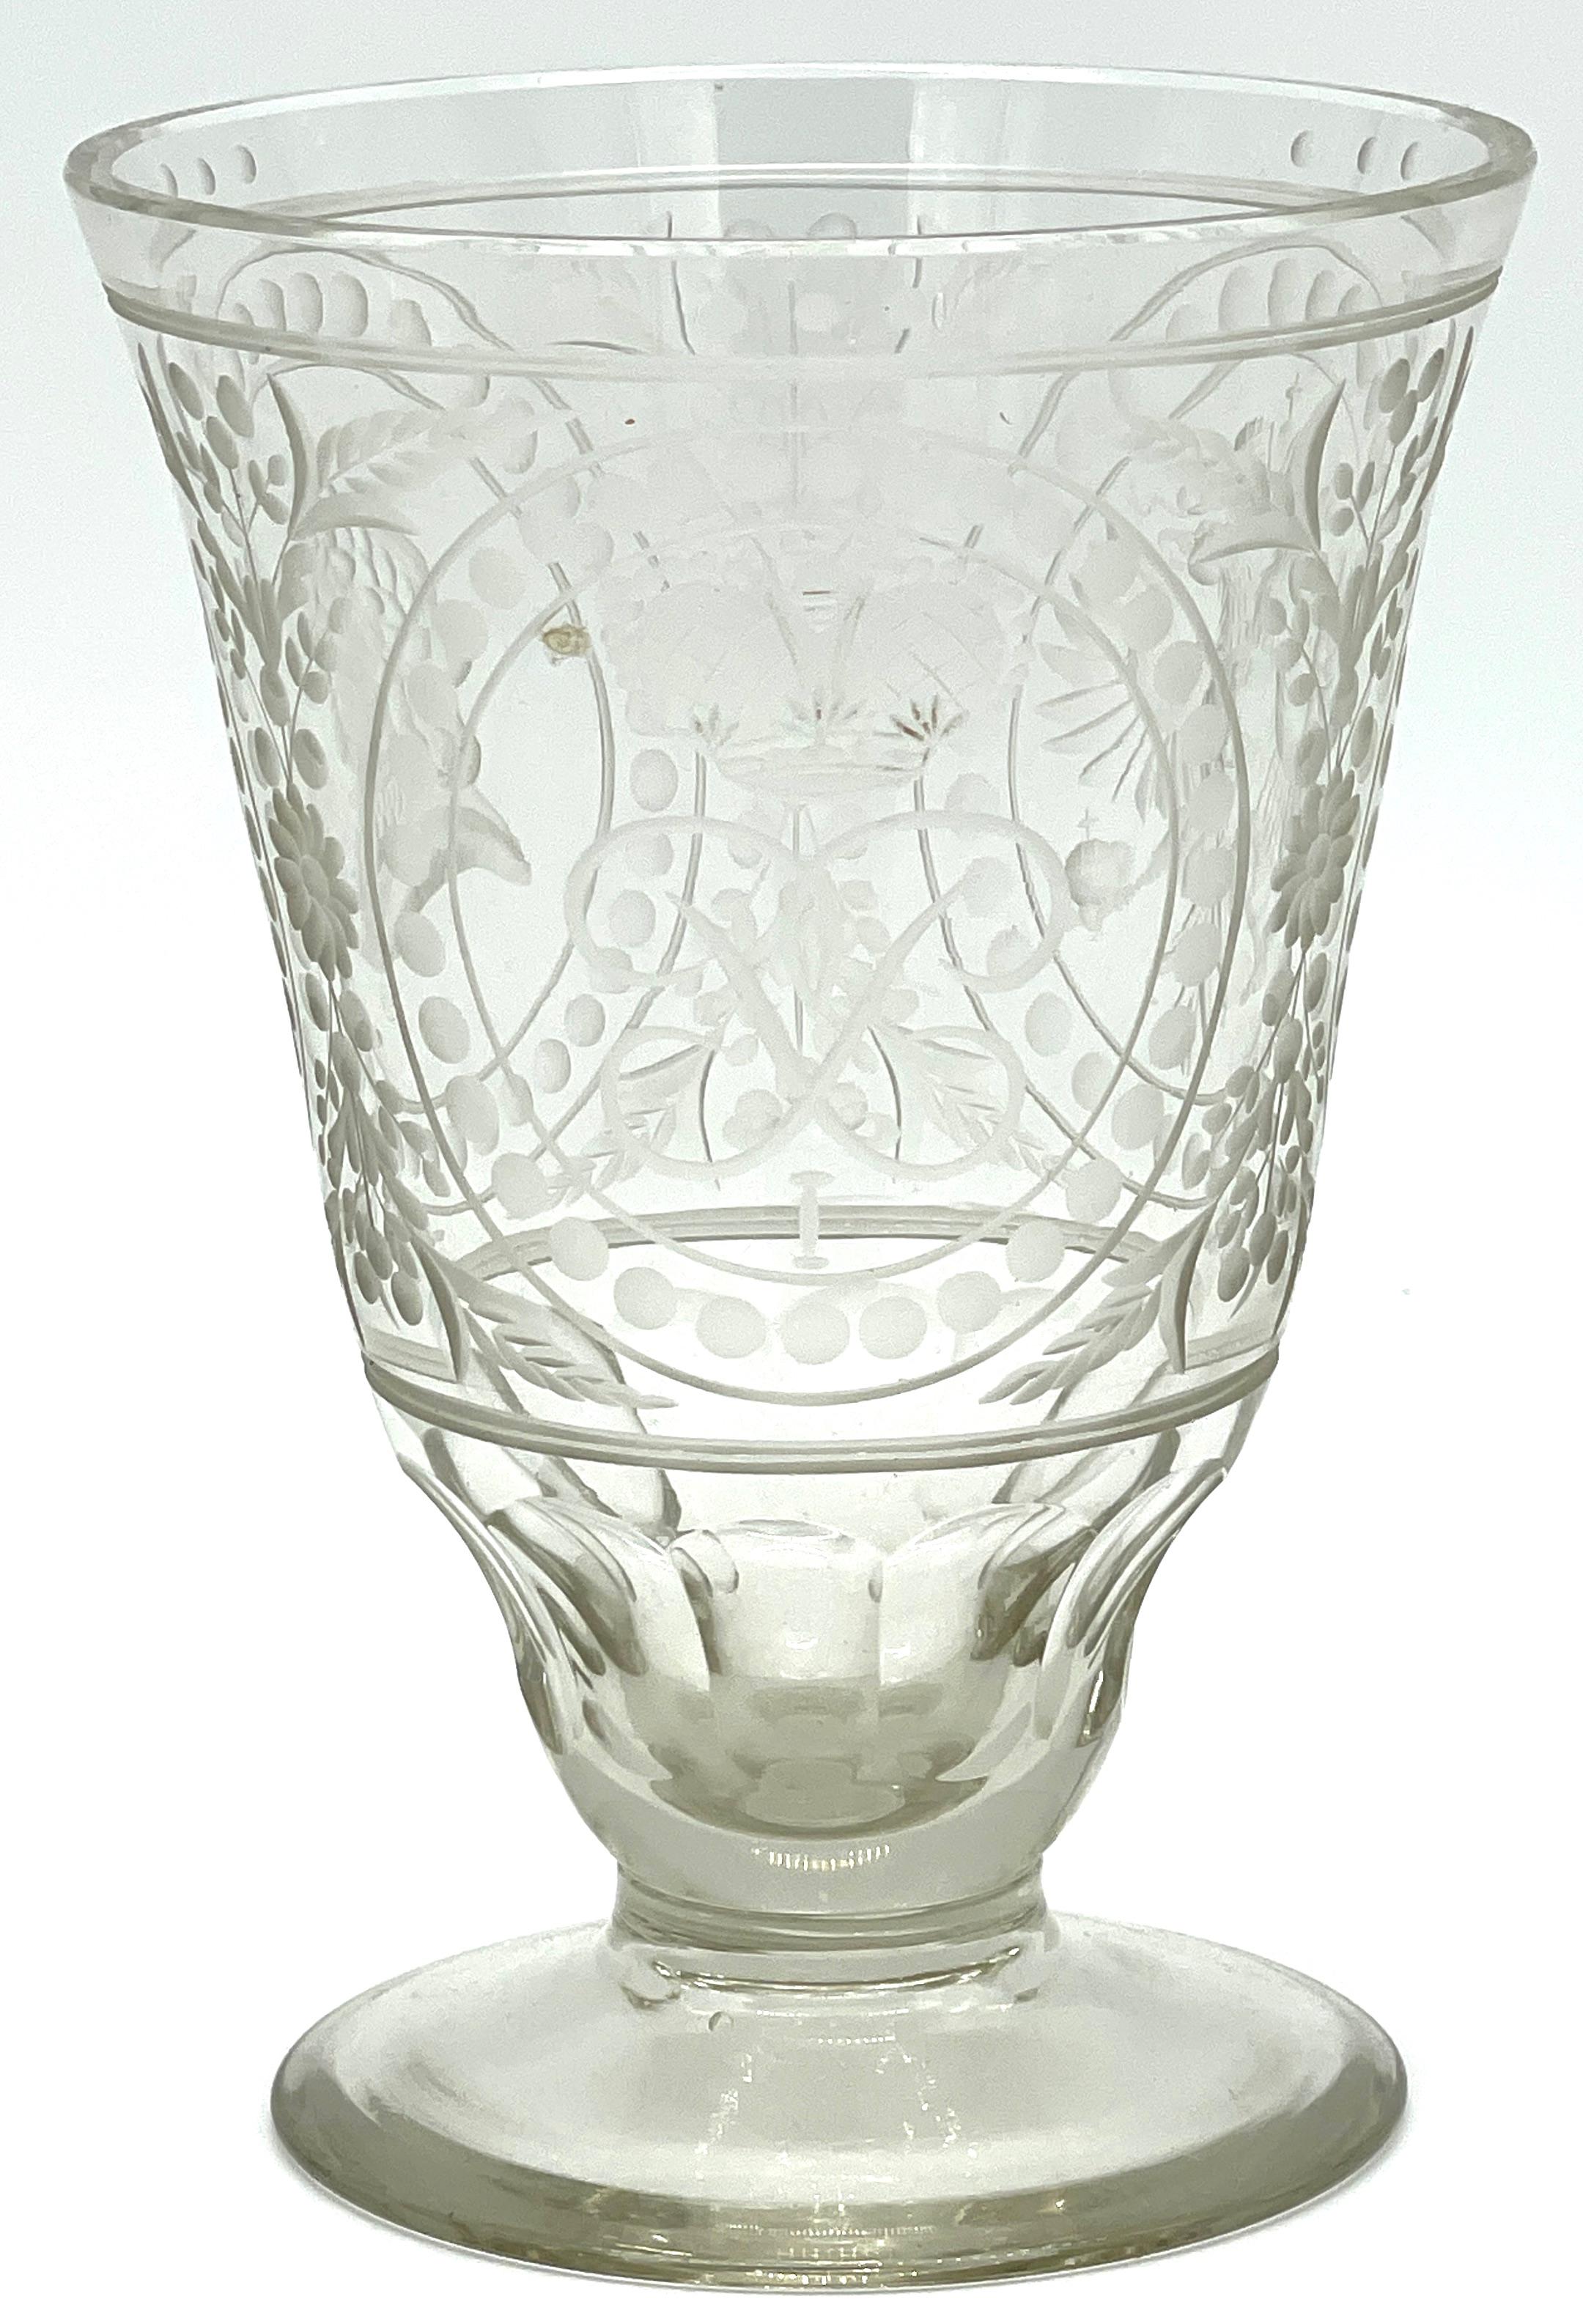 19th Century Russian Engraved Crystal Beaker, Commemorative of Alexander I, 